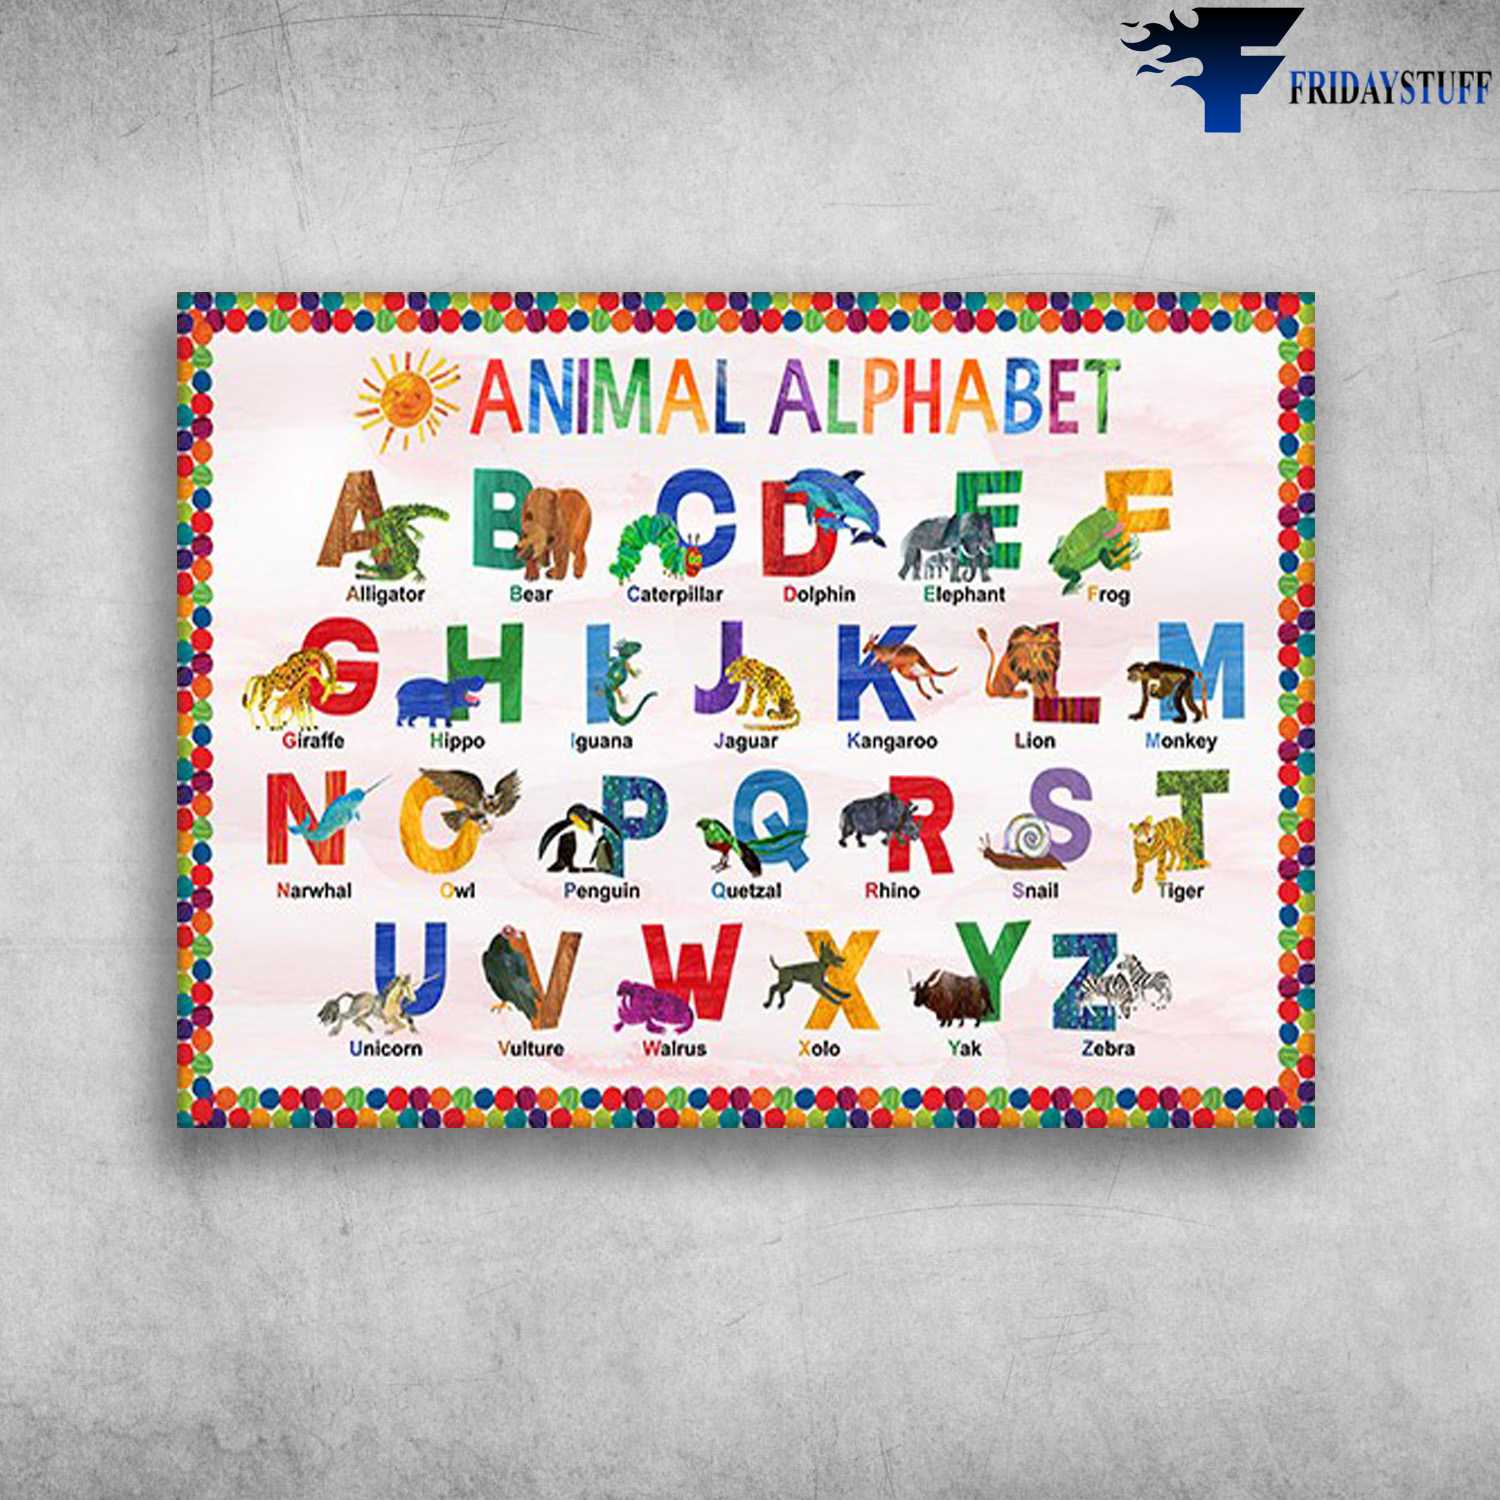 Animal Alphabet - Alligator, Bear, Caterpillar, Dolphin, Elephant, Frog